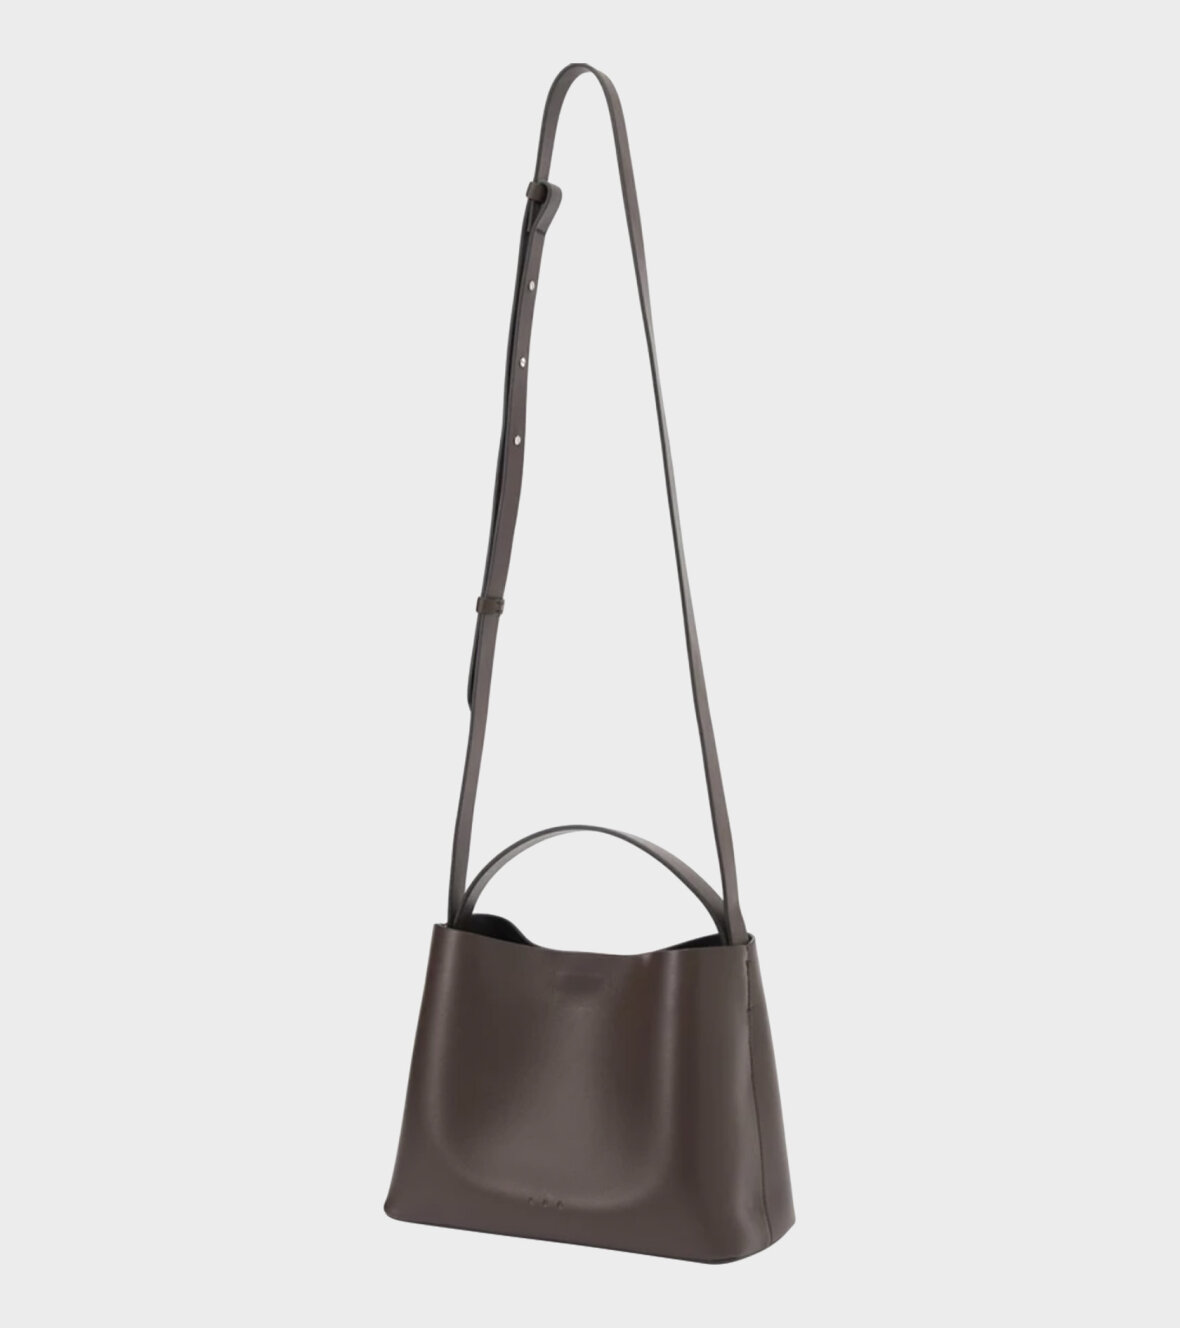 AESTHER EKME Mini Sac Smooth Leather Top Handle Bag - Evergreen